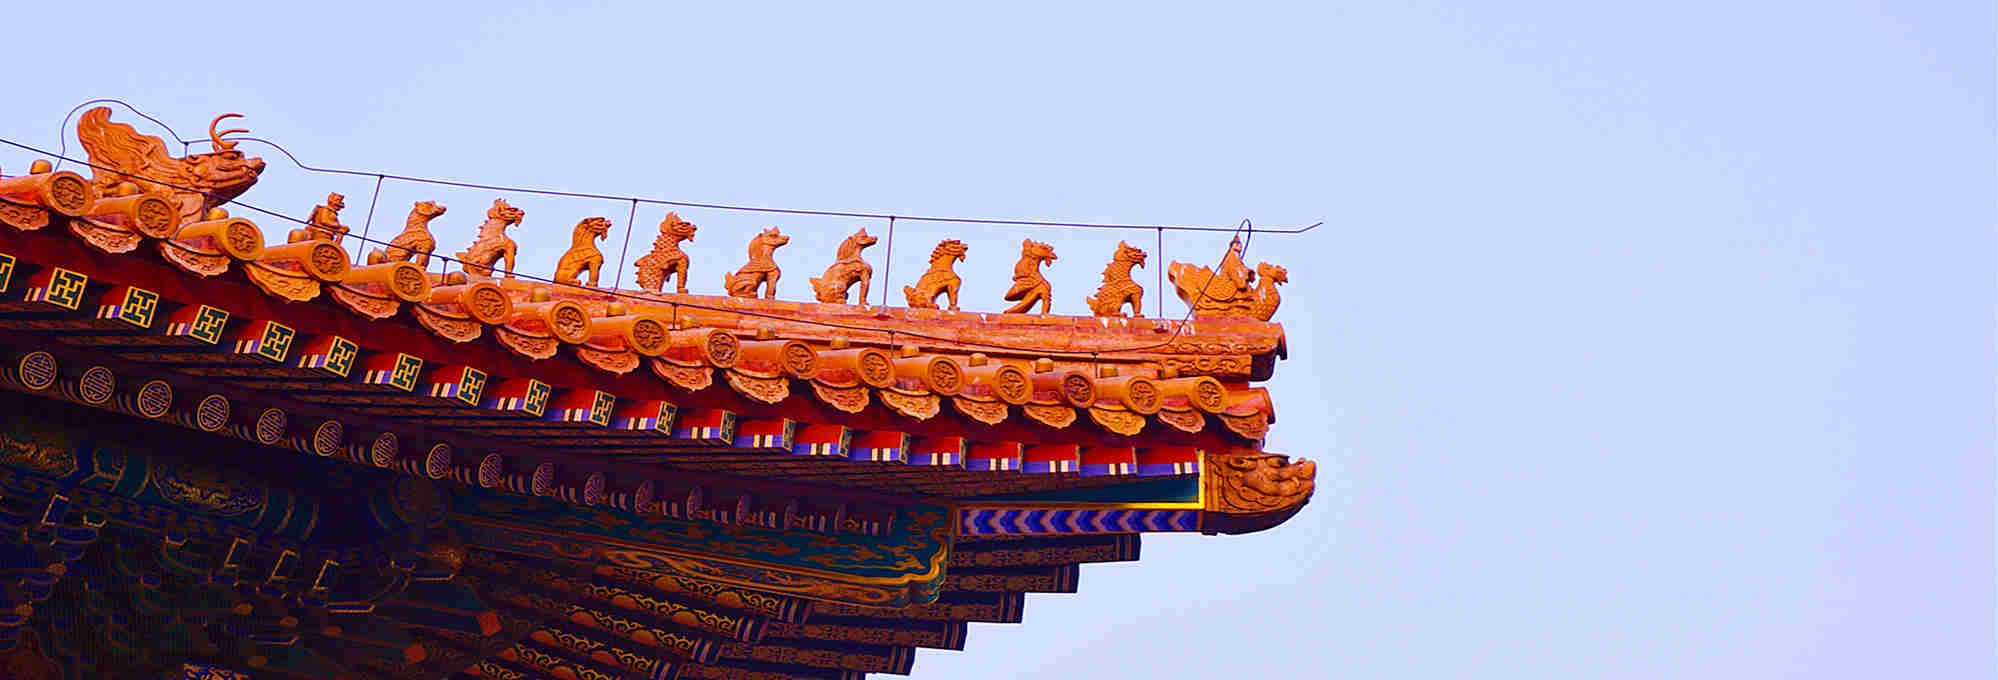 1.5-Hour Photoshoot Experience Near the Forbidden City